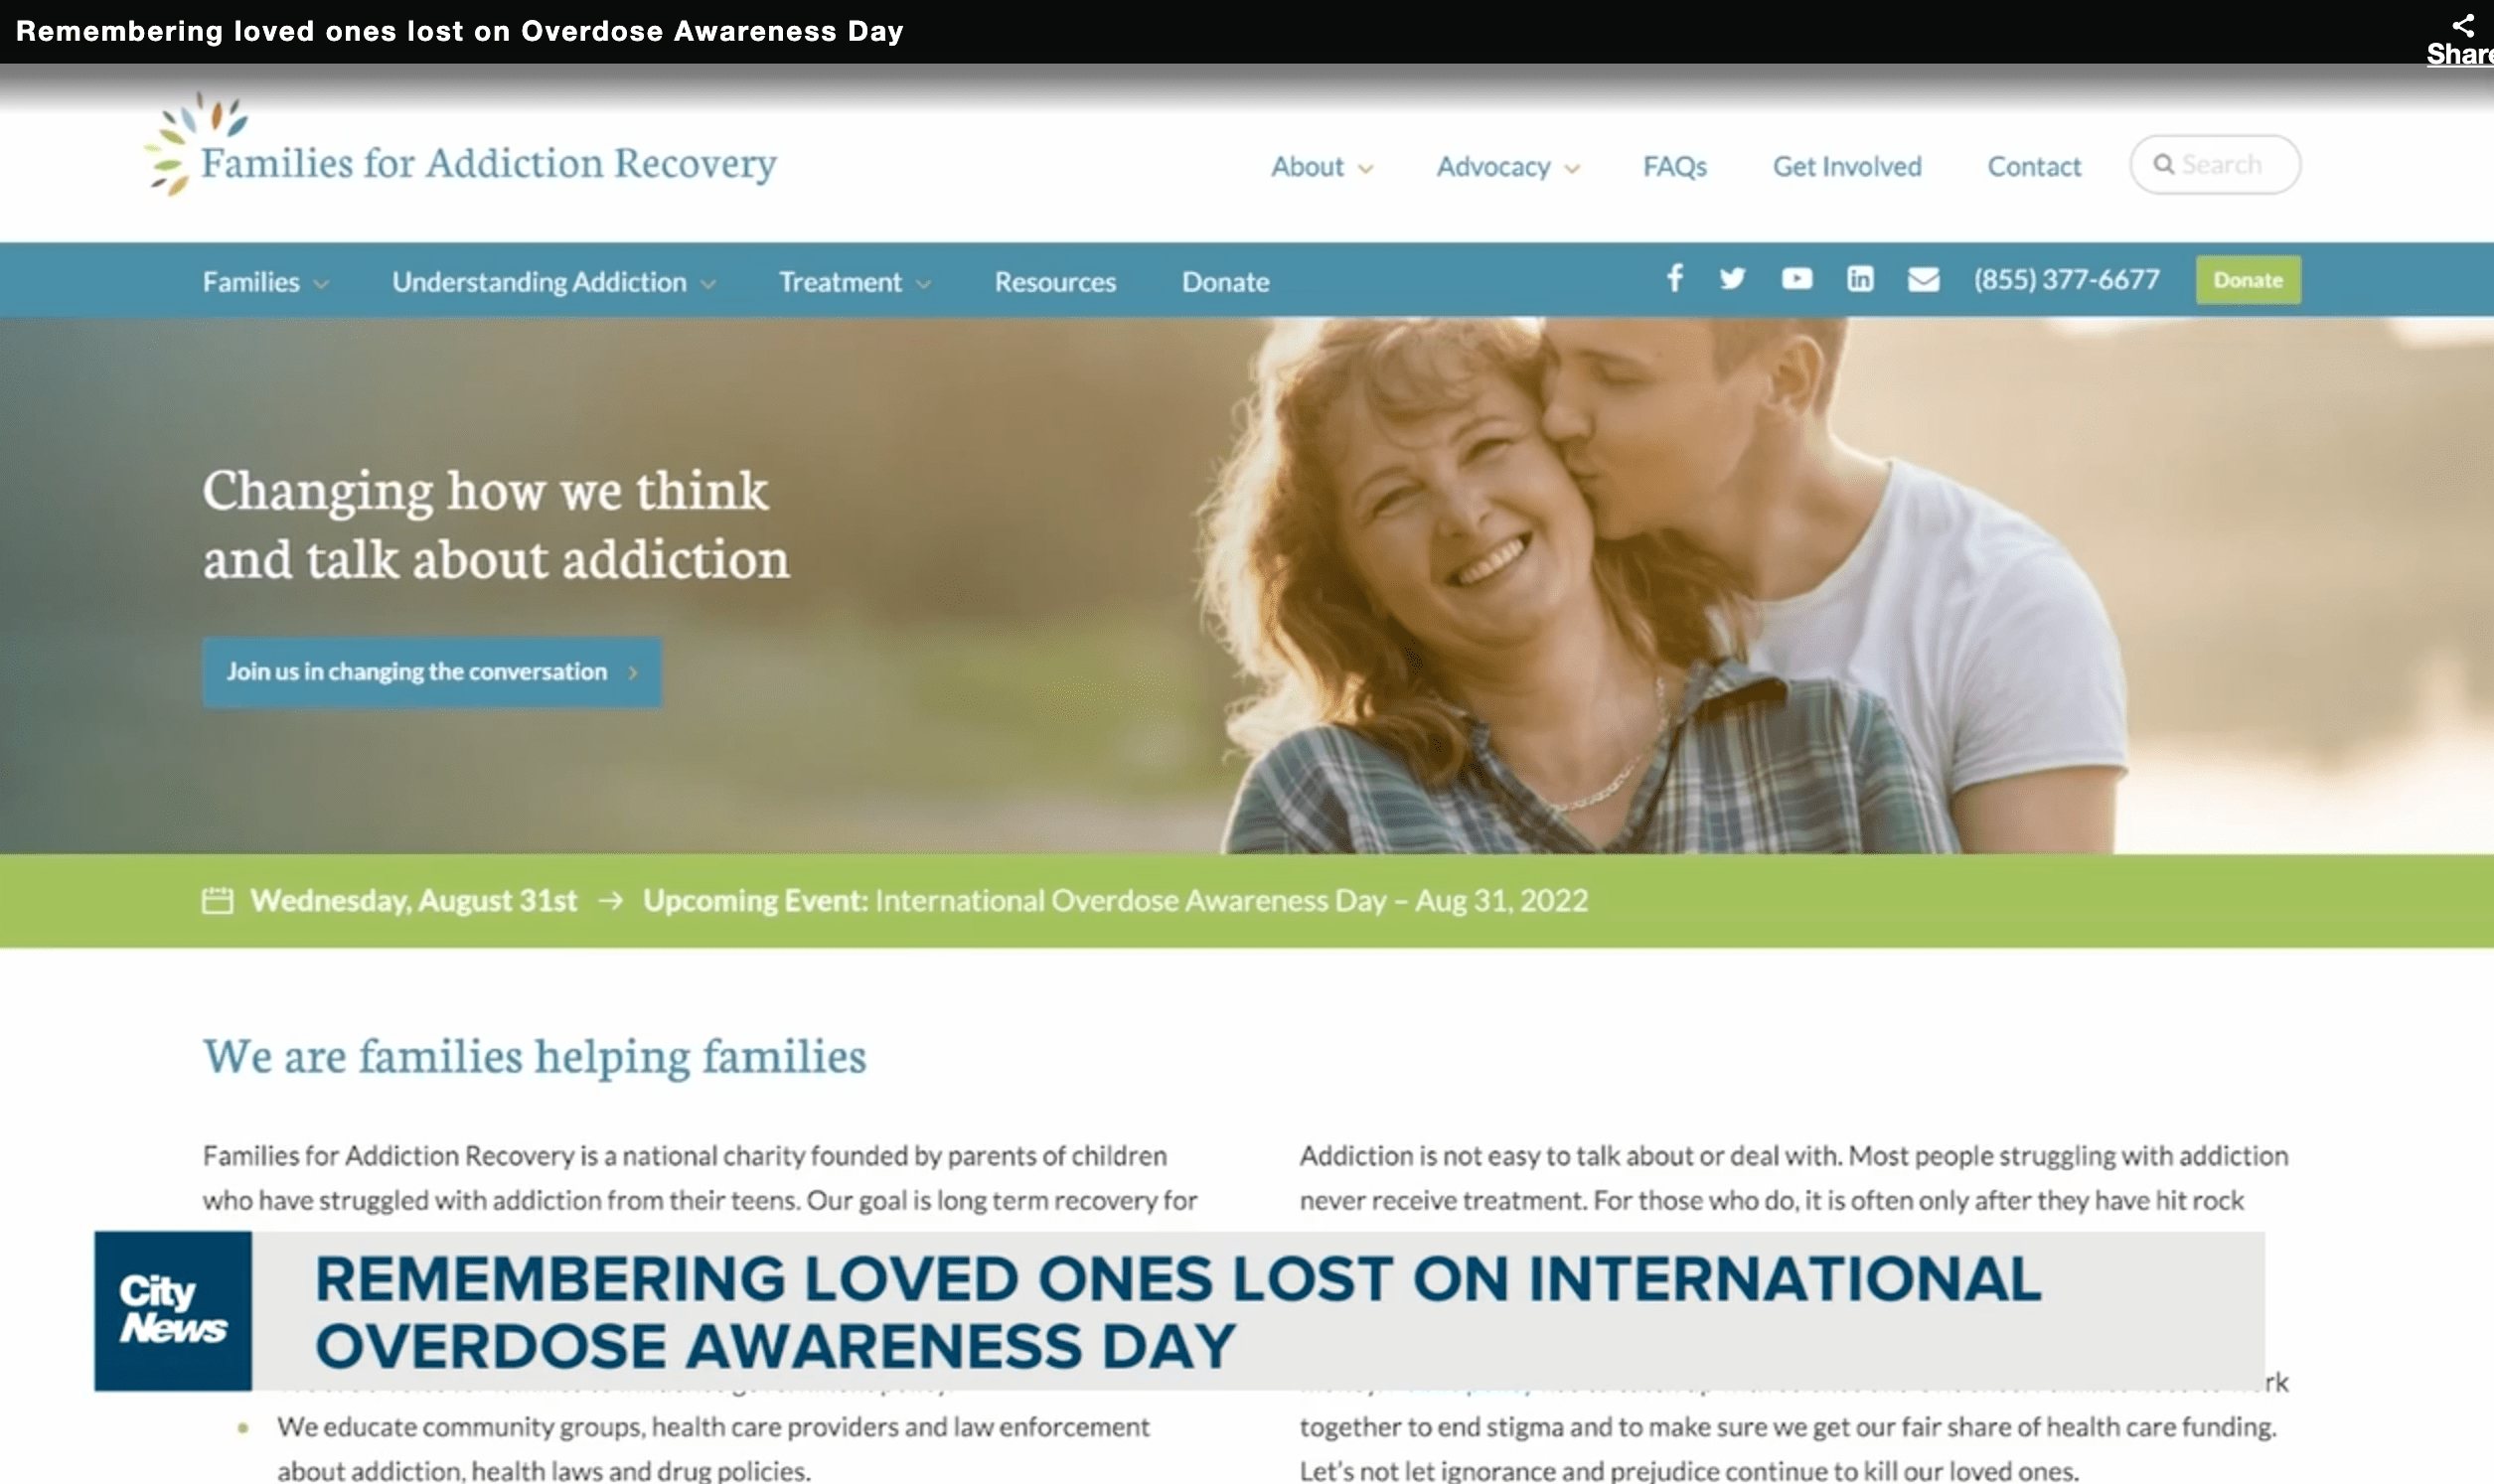 CityNews: Calls to Action on International Overdose Awareness Day 2022